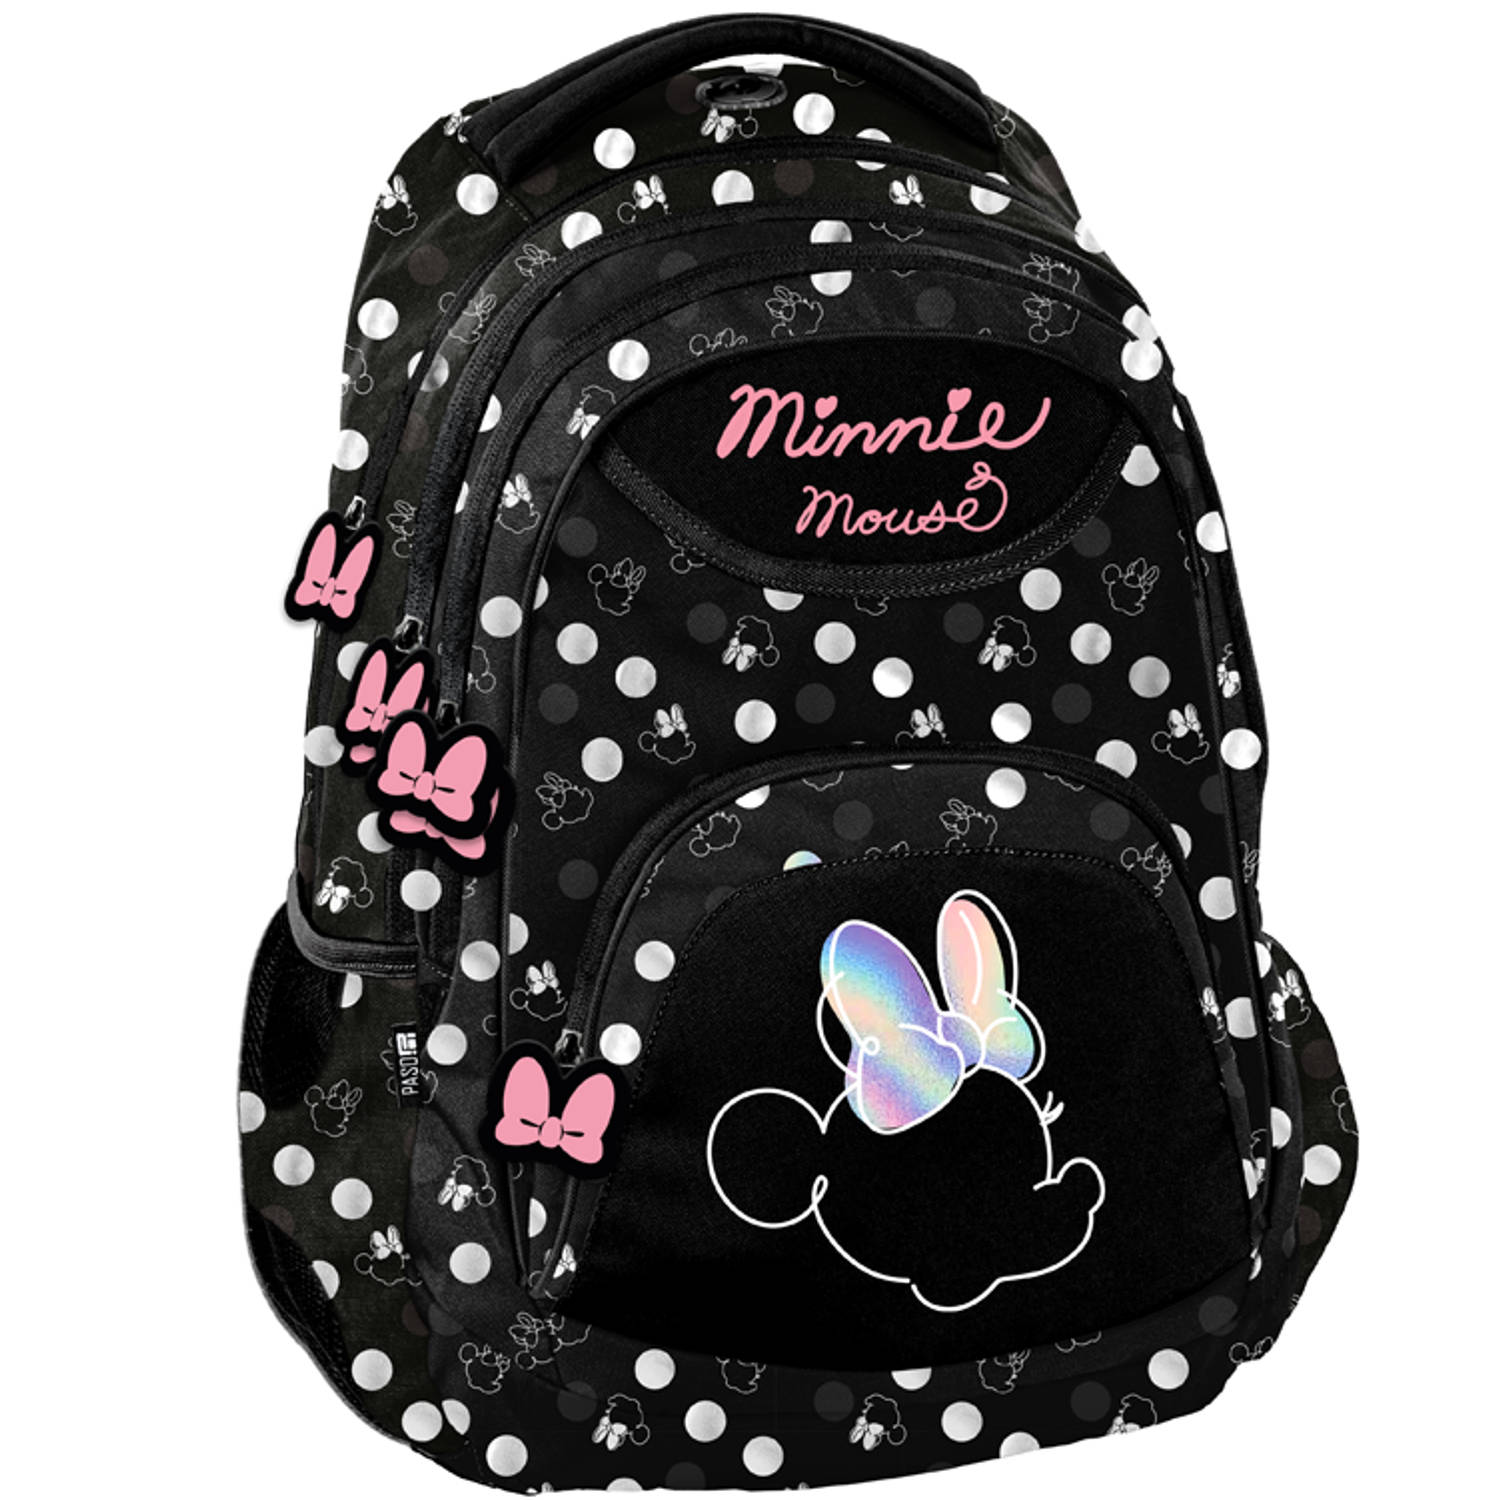 Disney Minnie Mouse Rugzak, Dots - 39 x 29 x 16 cm - Polyester